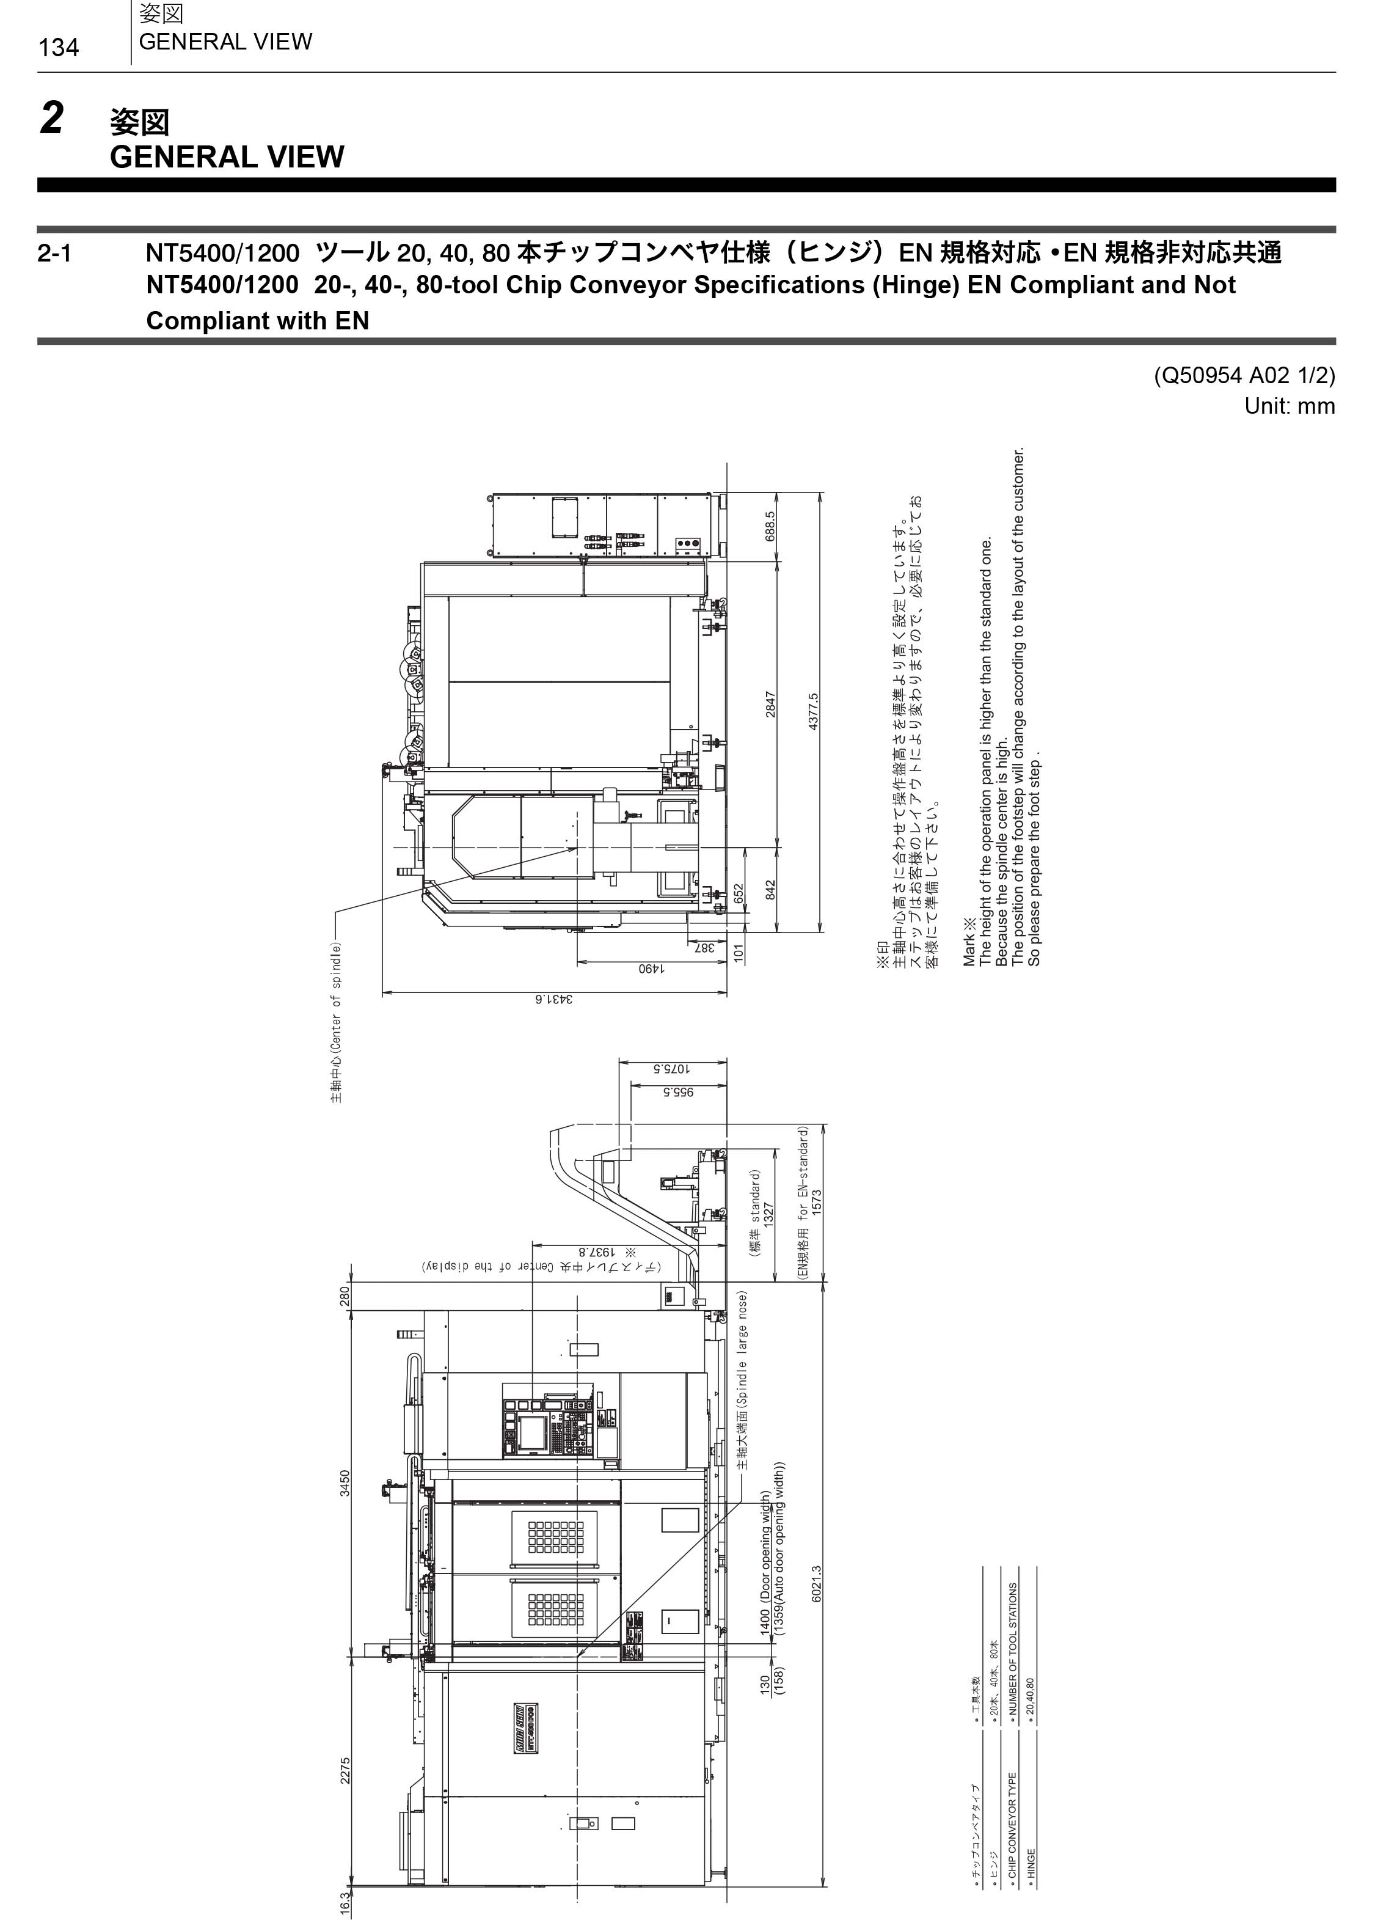 Mori Seiki NT5400 DCG/1800SZ CNC 5-Axis Horizontal Turning Center, MXS-711 III CNC control, 36.2” - Image 21 of 22